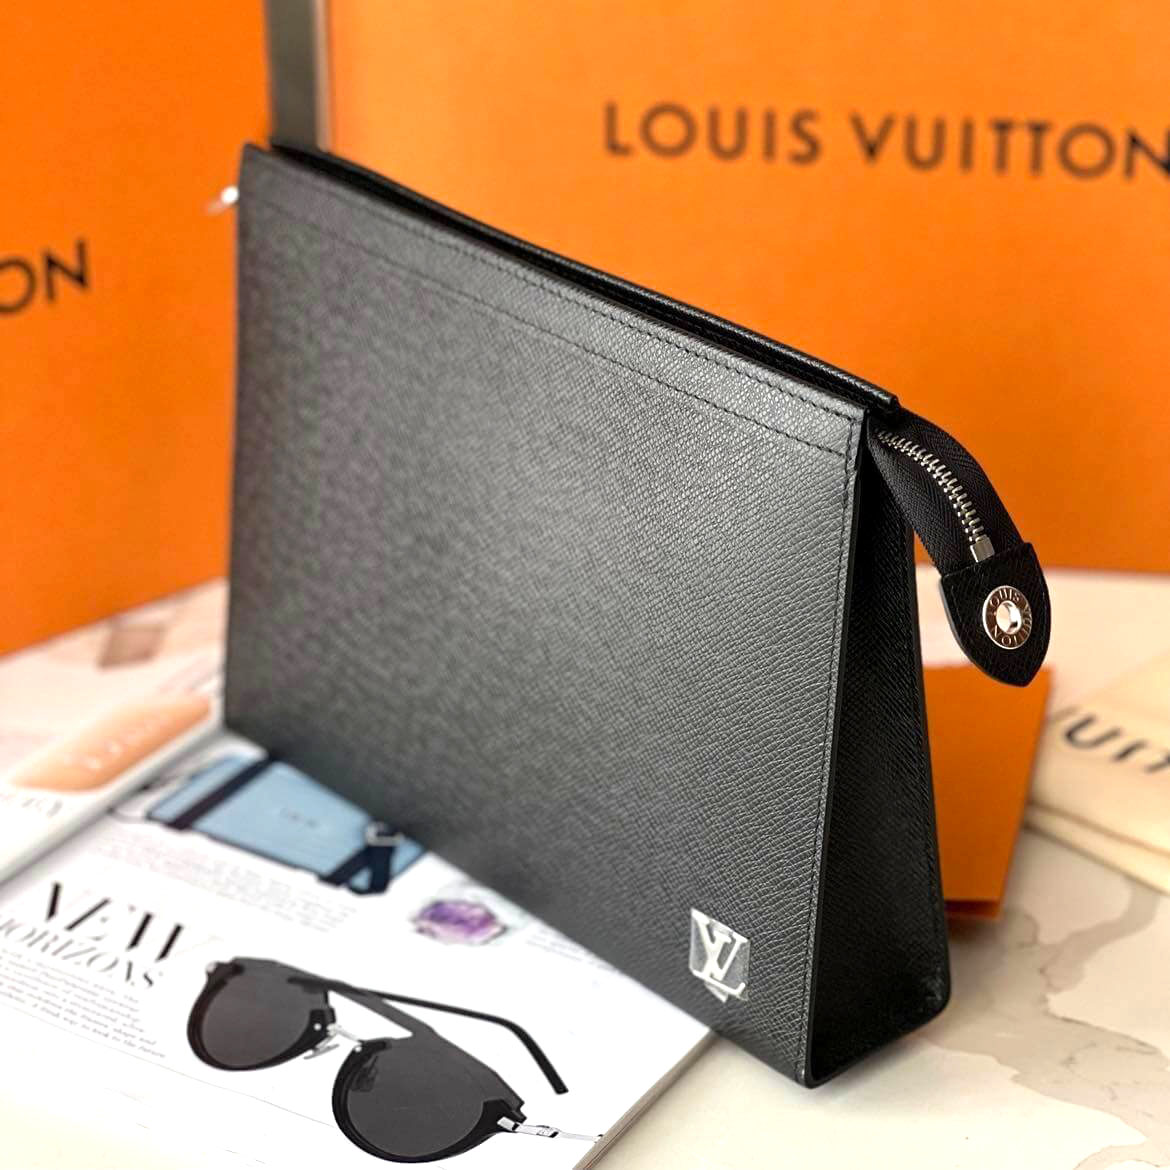 Louis Vuitton Clutch Câm Tay Pochette Voyage Màu Đen Size 27